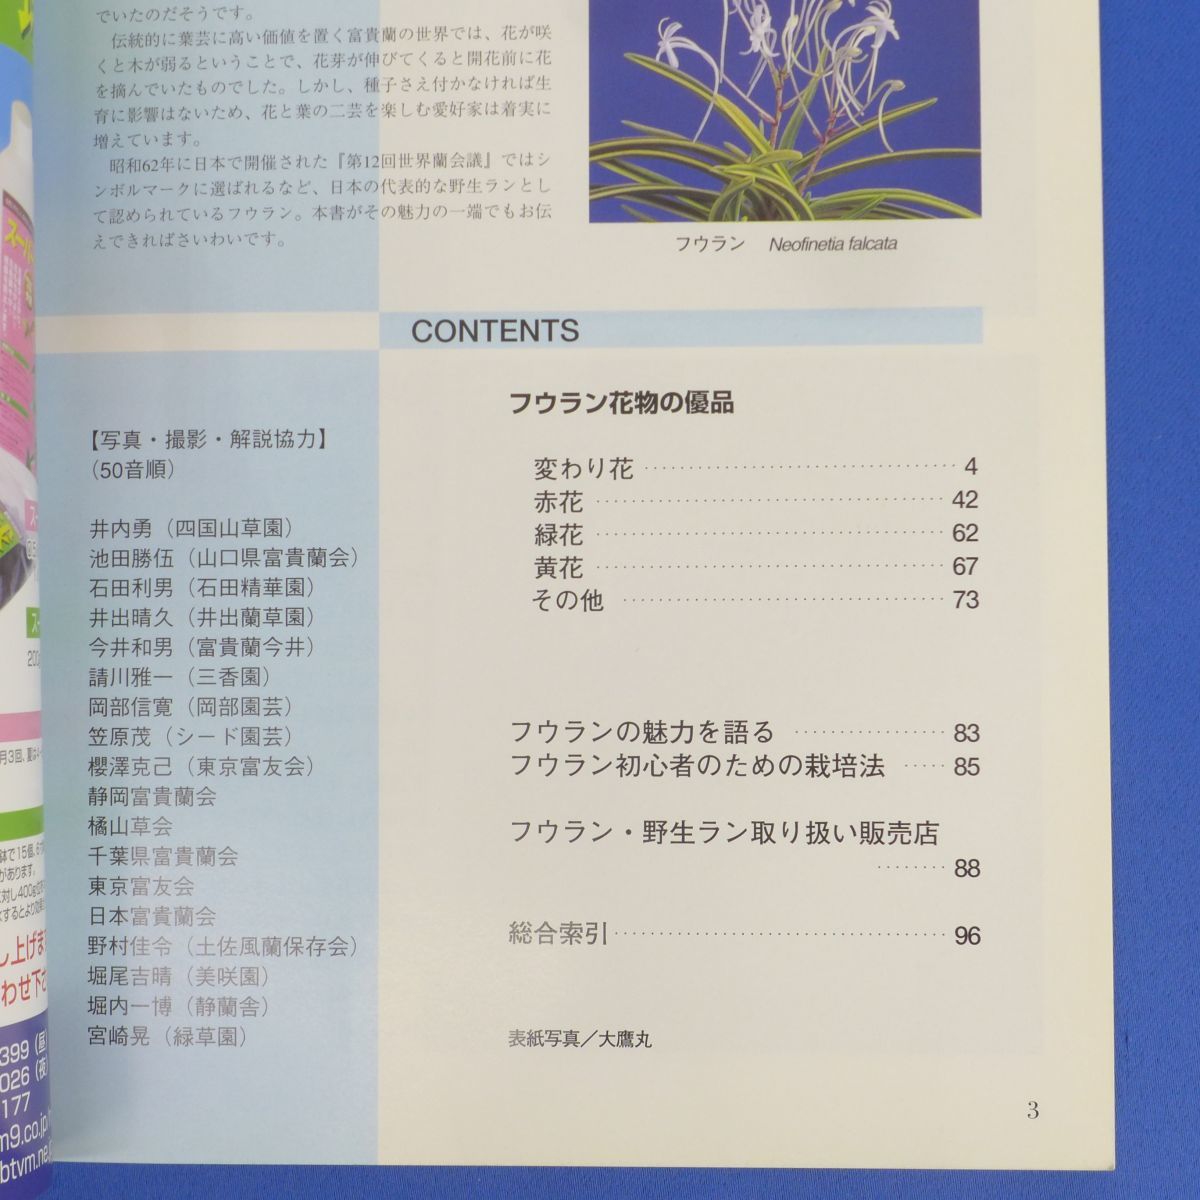 yuS5643*flaun new version flower illustrated reference book nature .. raw Ran increase . new plan publish department 